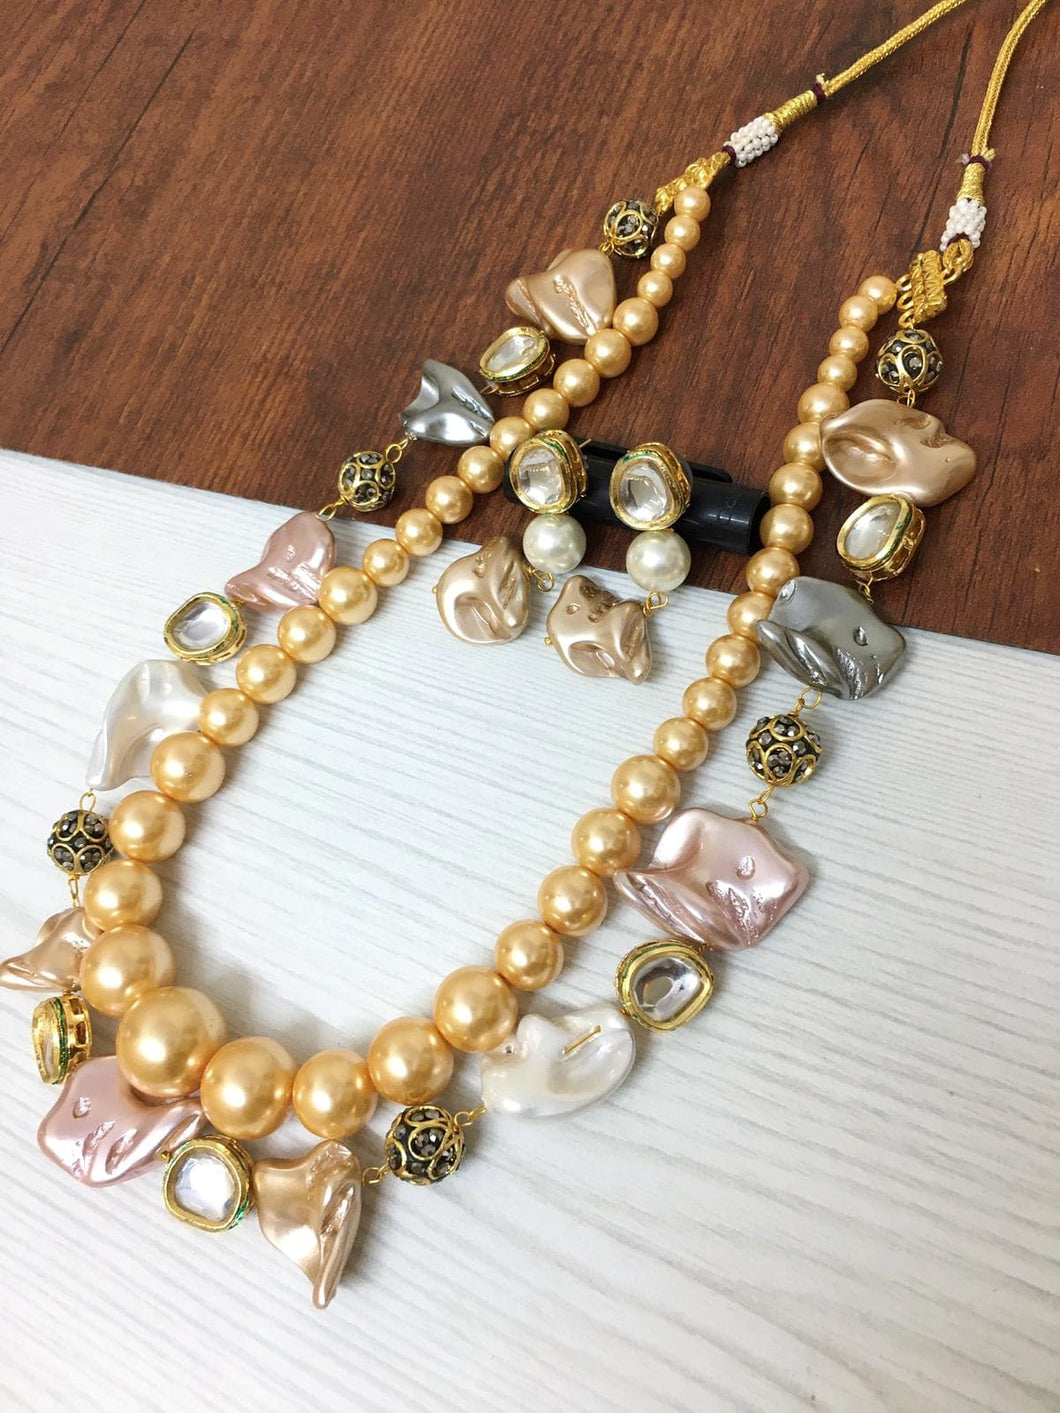 Statement pearl necklace with semi precious stones